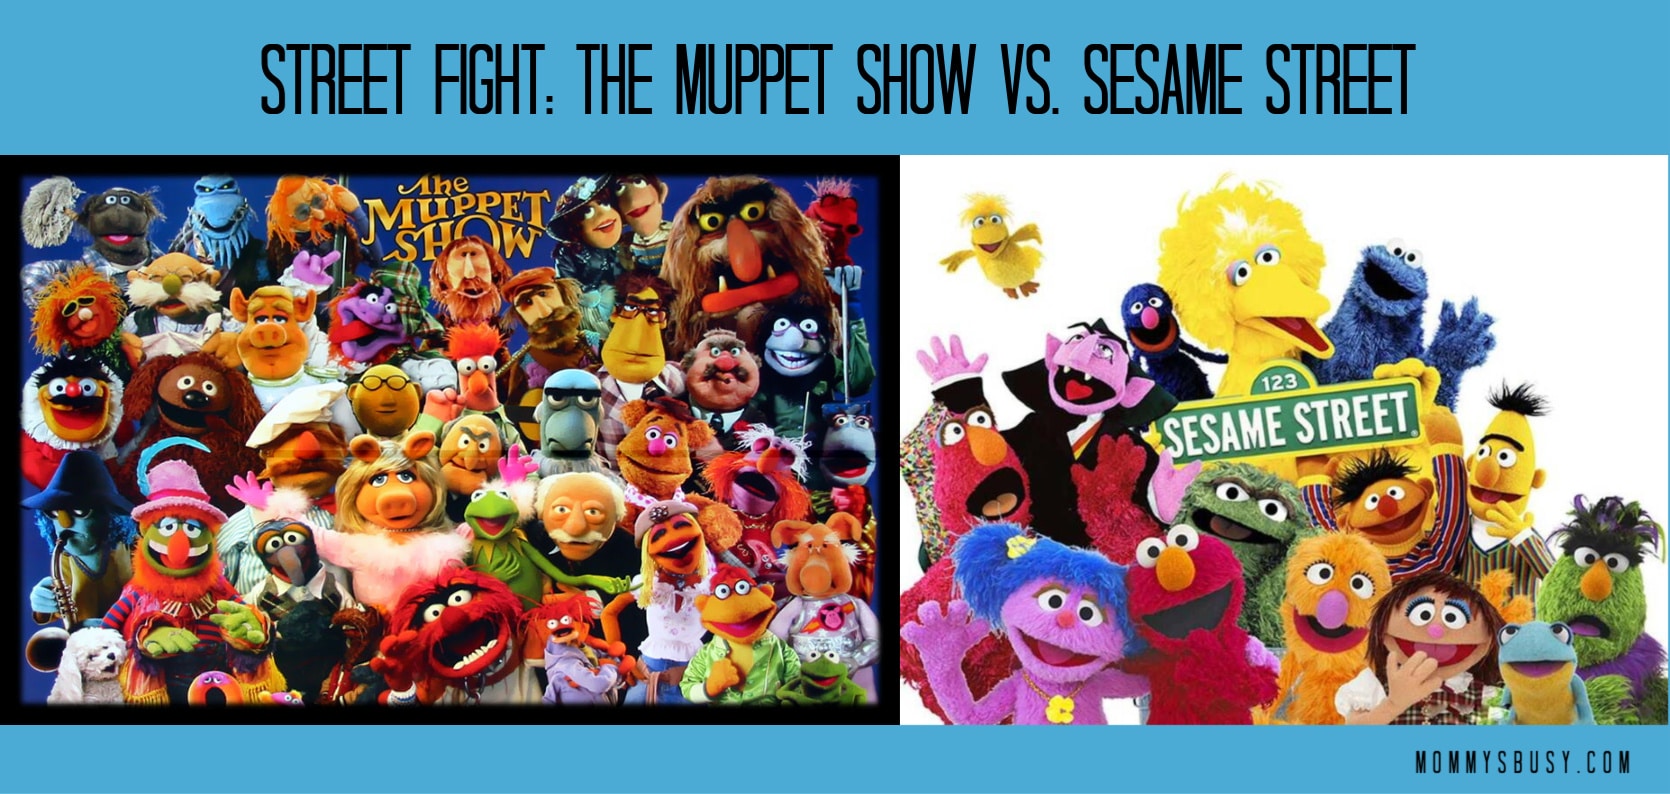 Muppets Street Fight